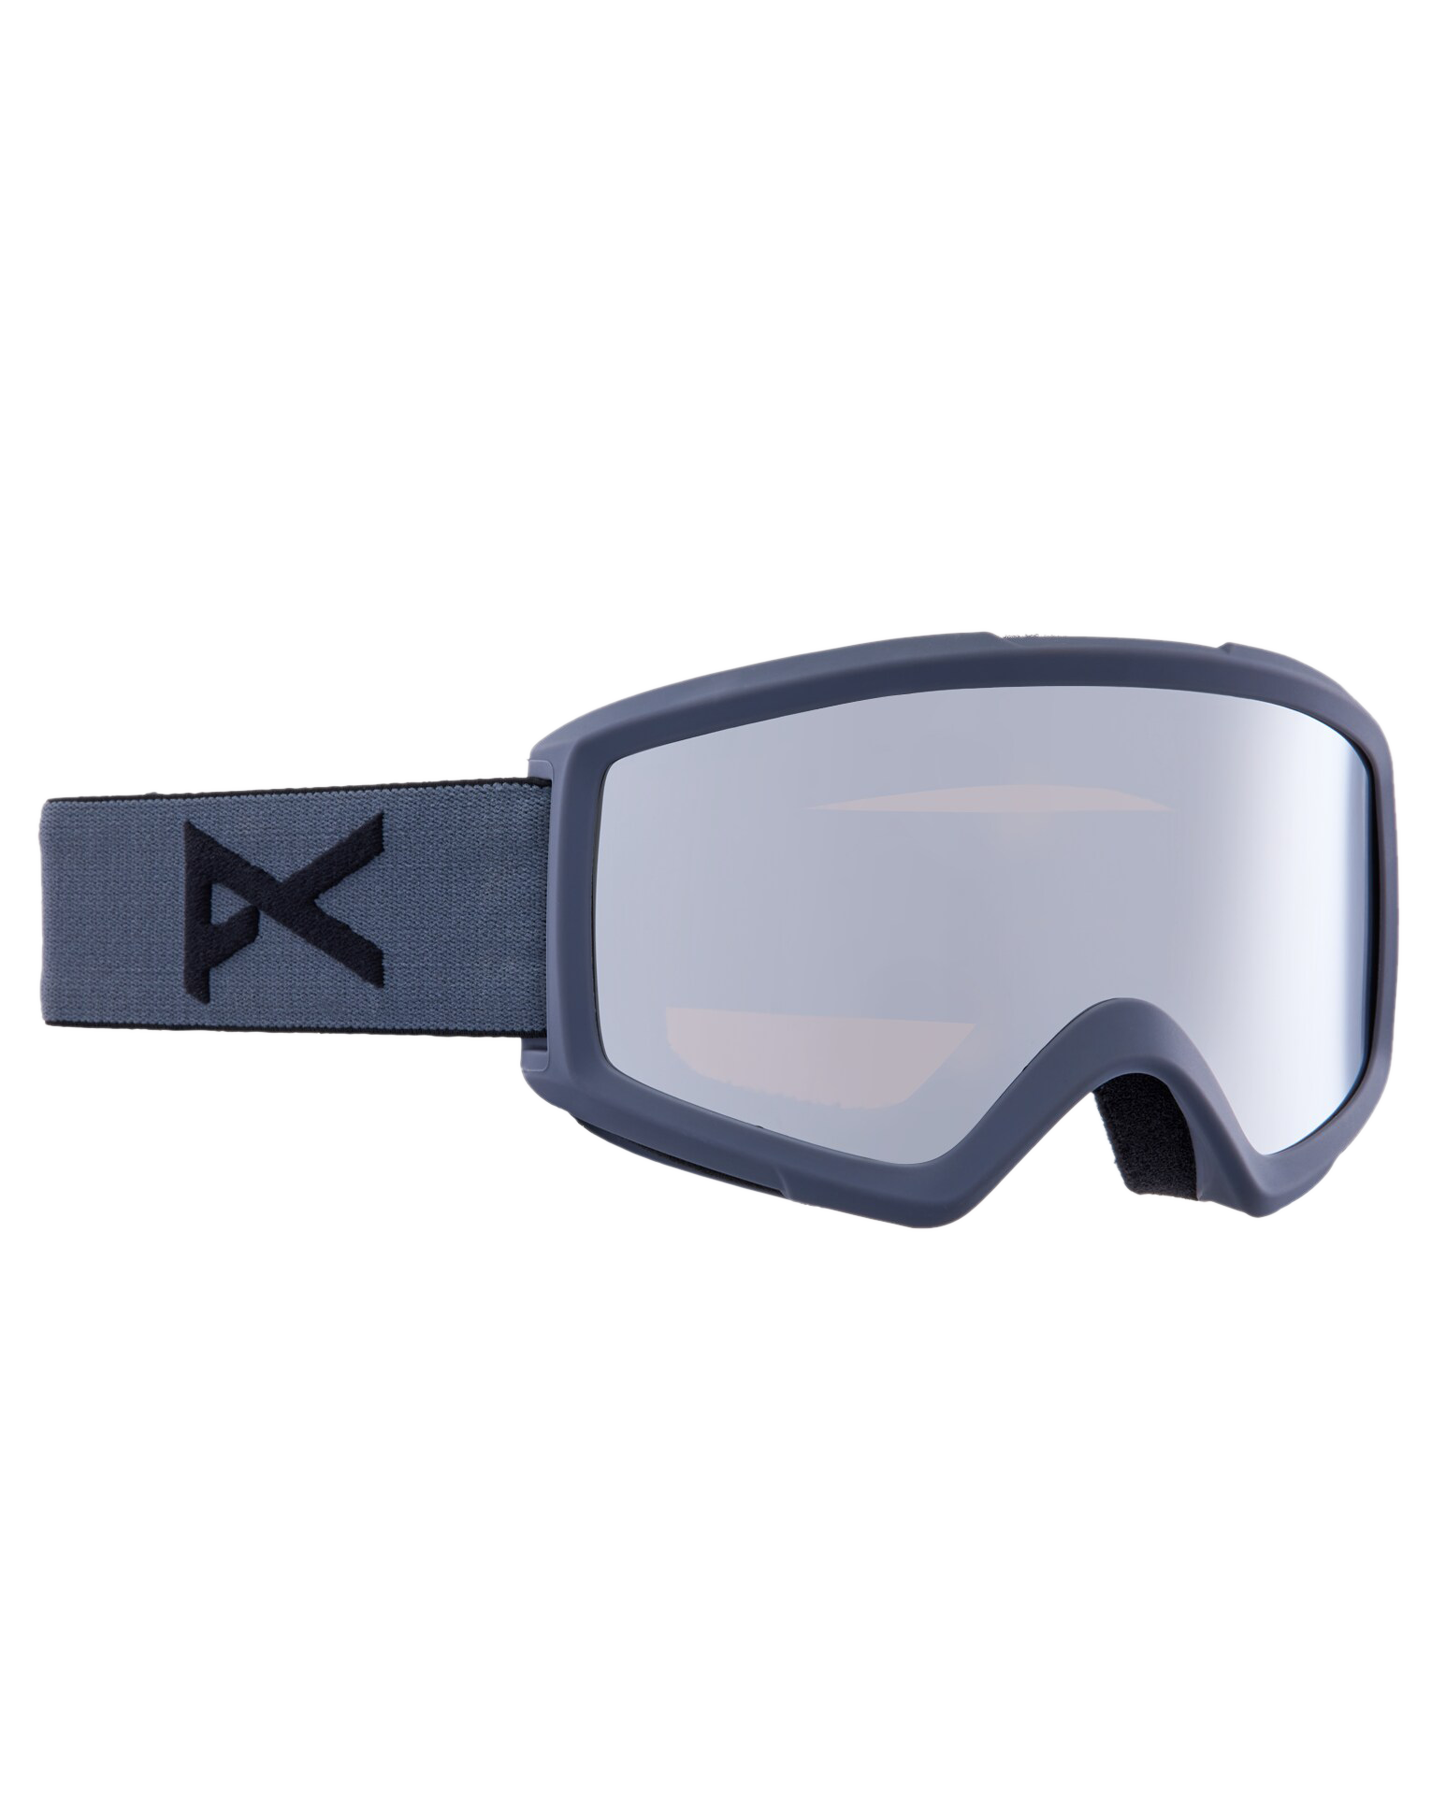 Anon Helix 2.0 Snow Goggles + Bonus Lens - Black/Silver Amber Lens Men's Snow Goggles - Trojan Wake Ski Snow